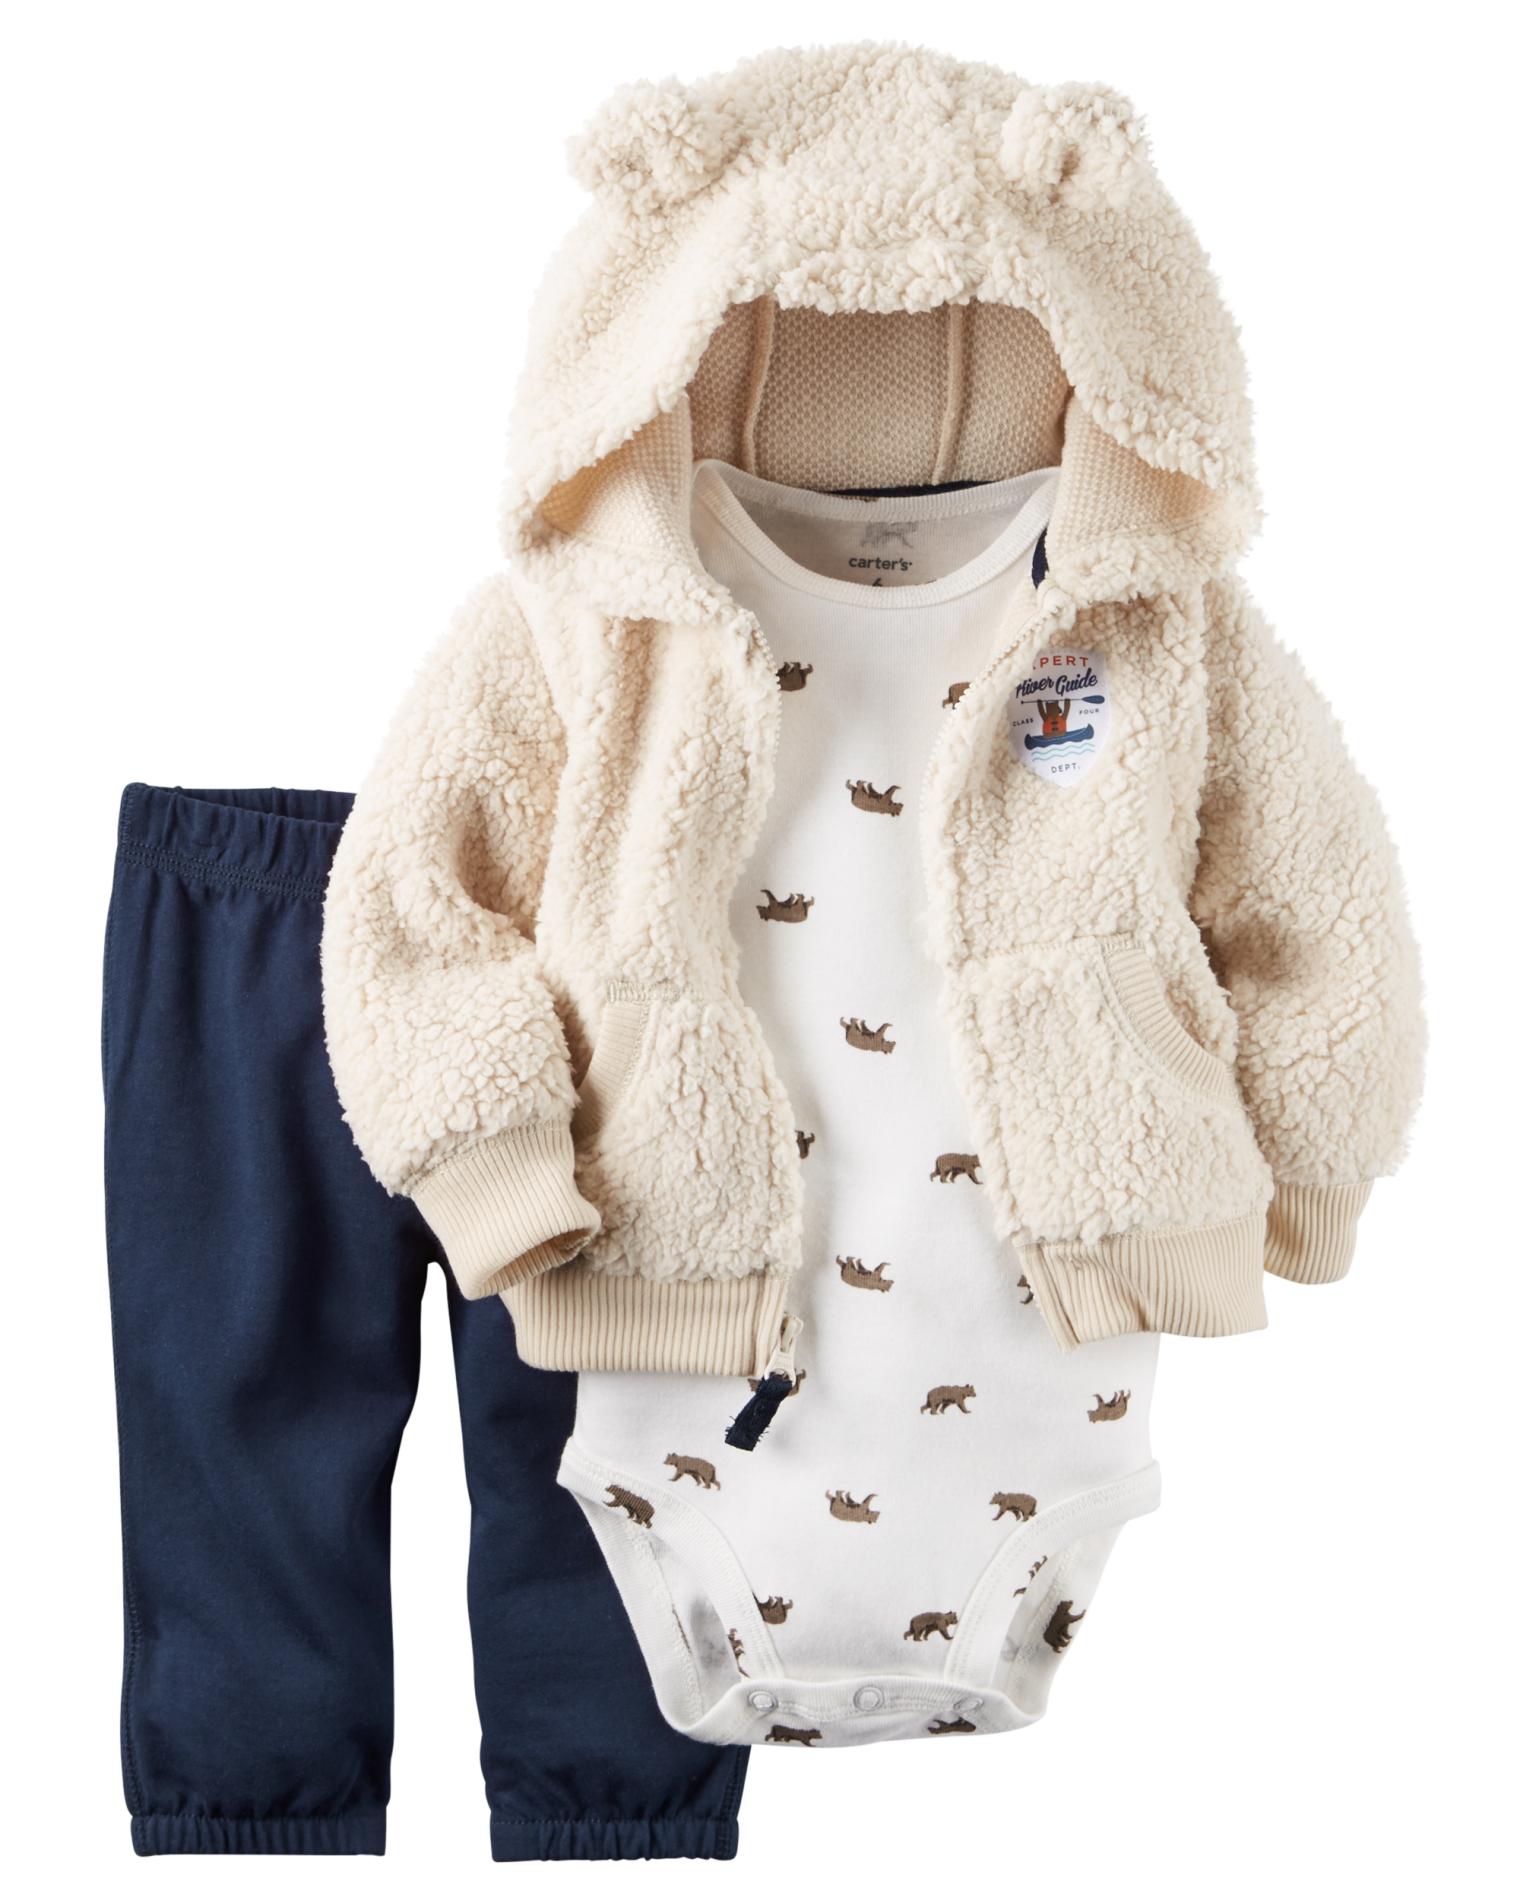 Carter's Newborn & Infant Boys' Hoodie Jacket, Bodysuit & Pants - Bears